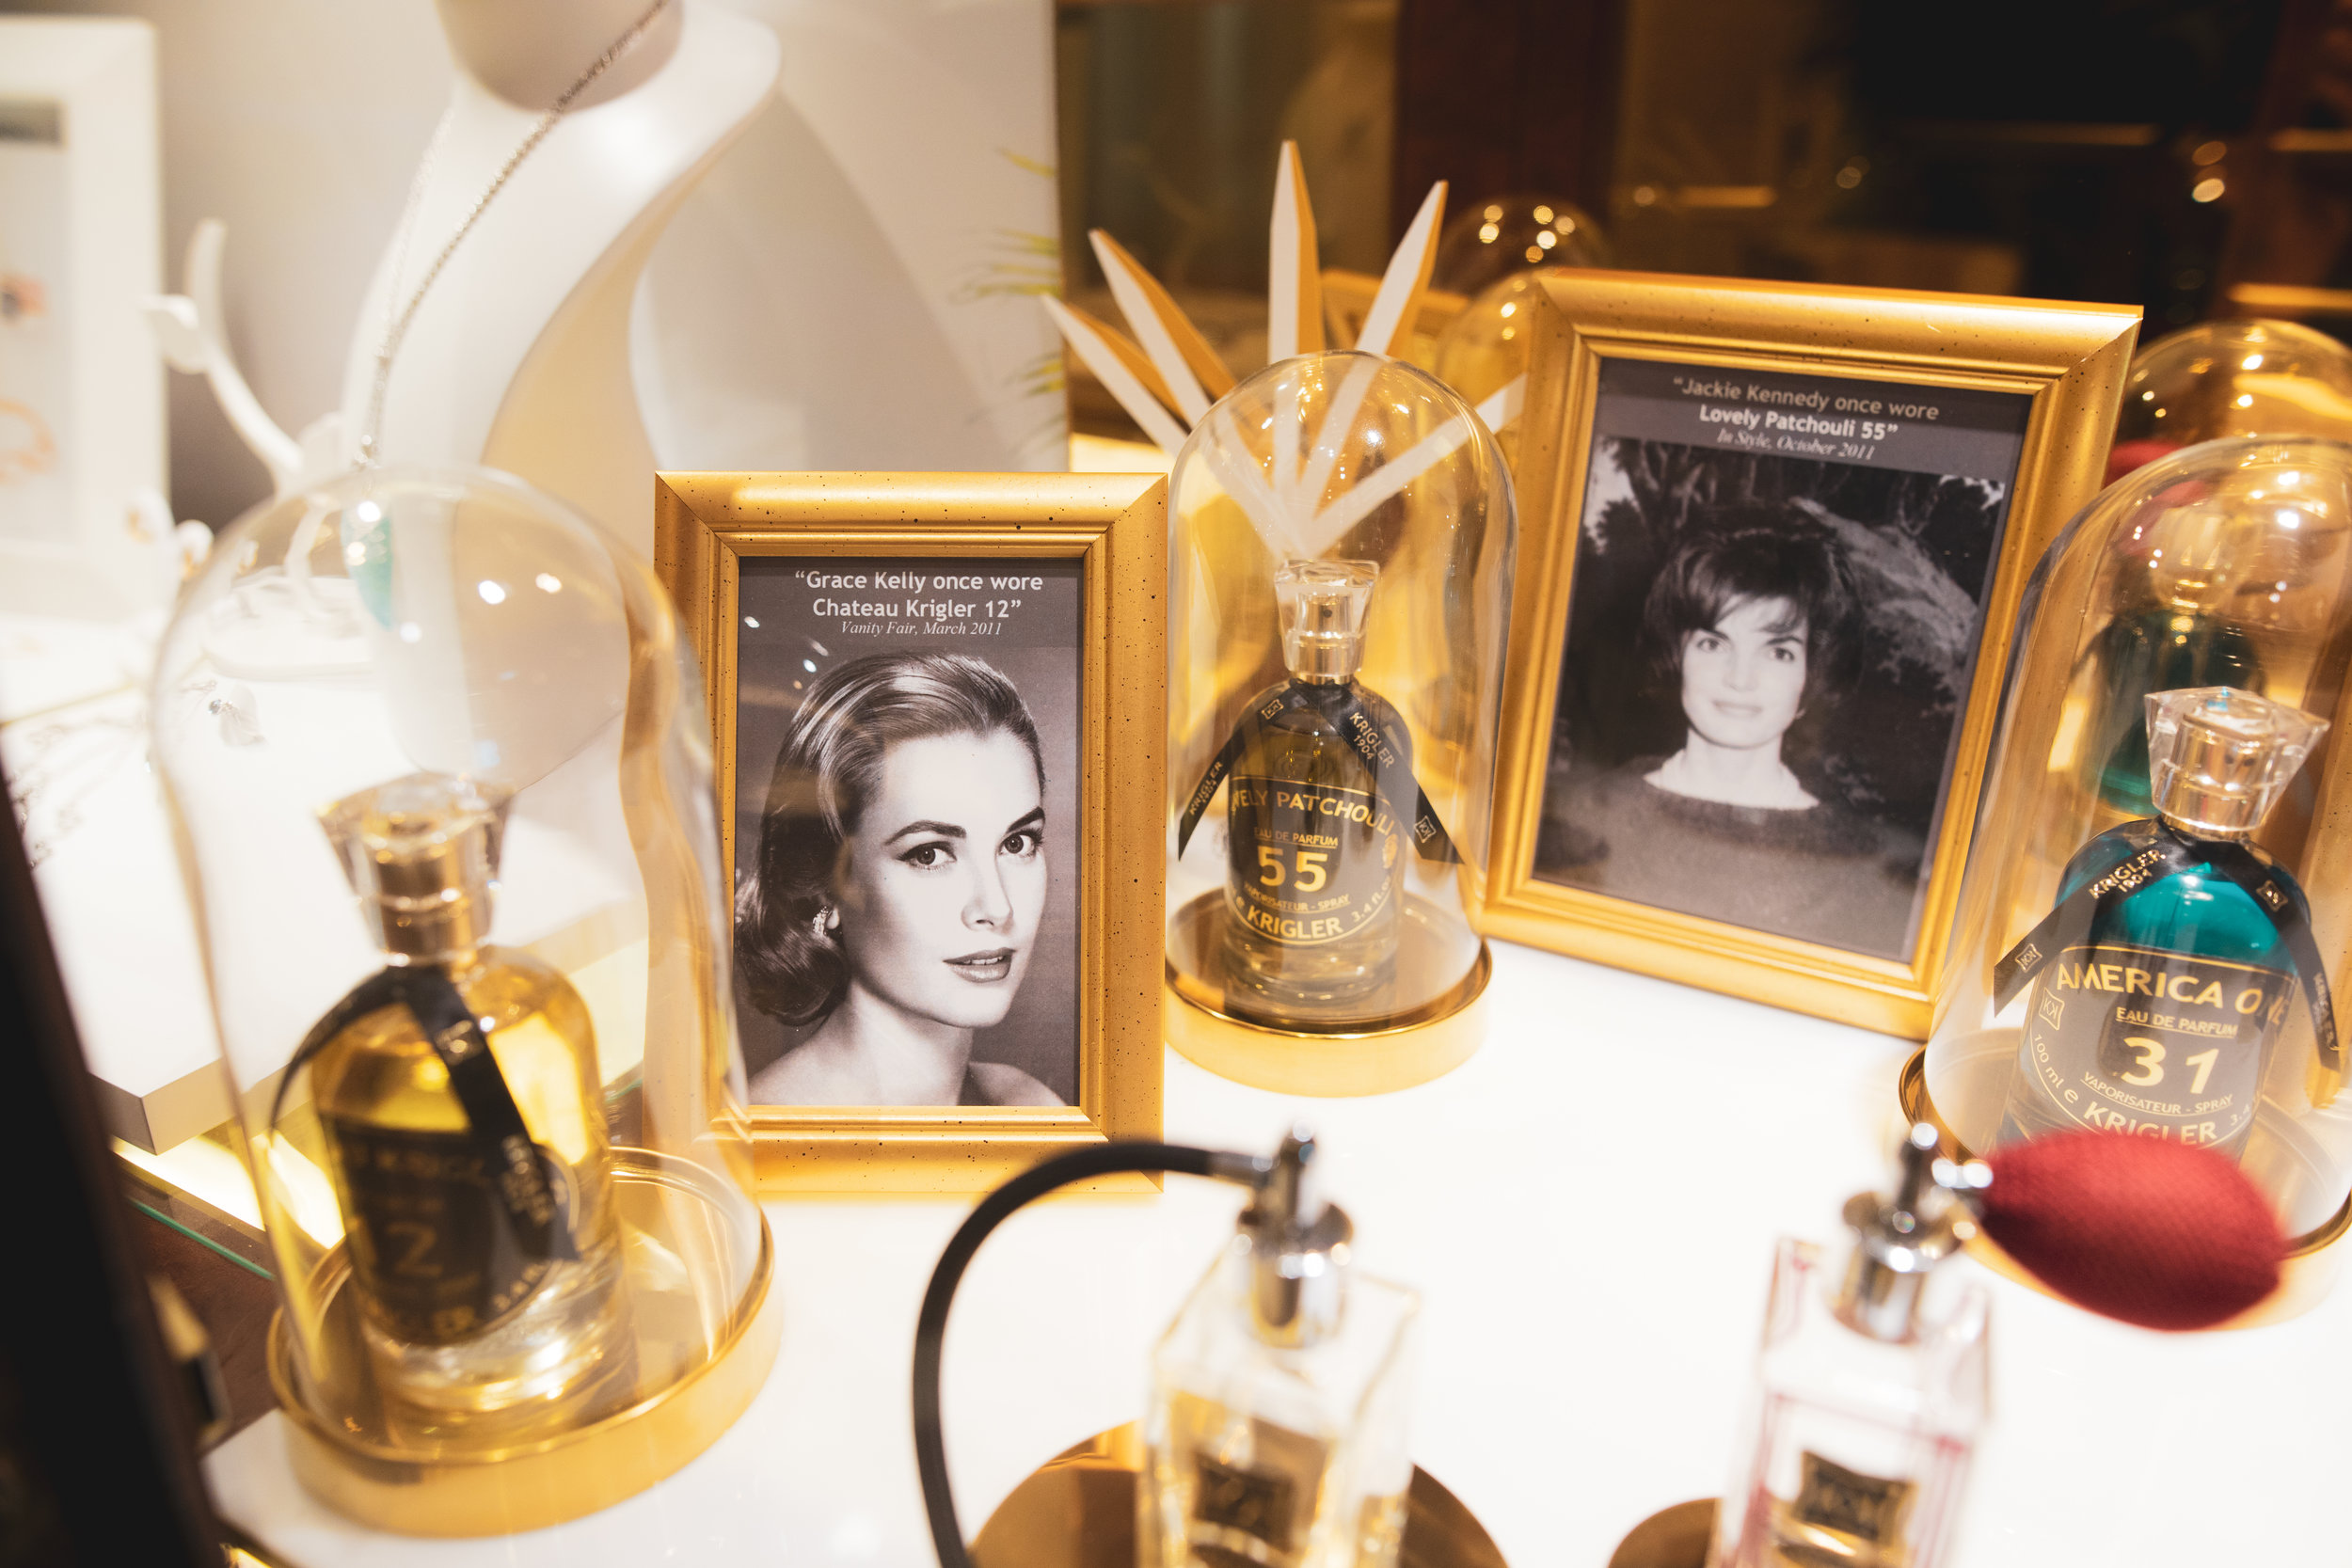 Krigler Haute Parfumery — Kelilina Photography and Films